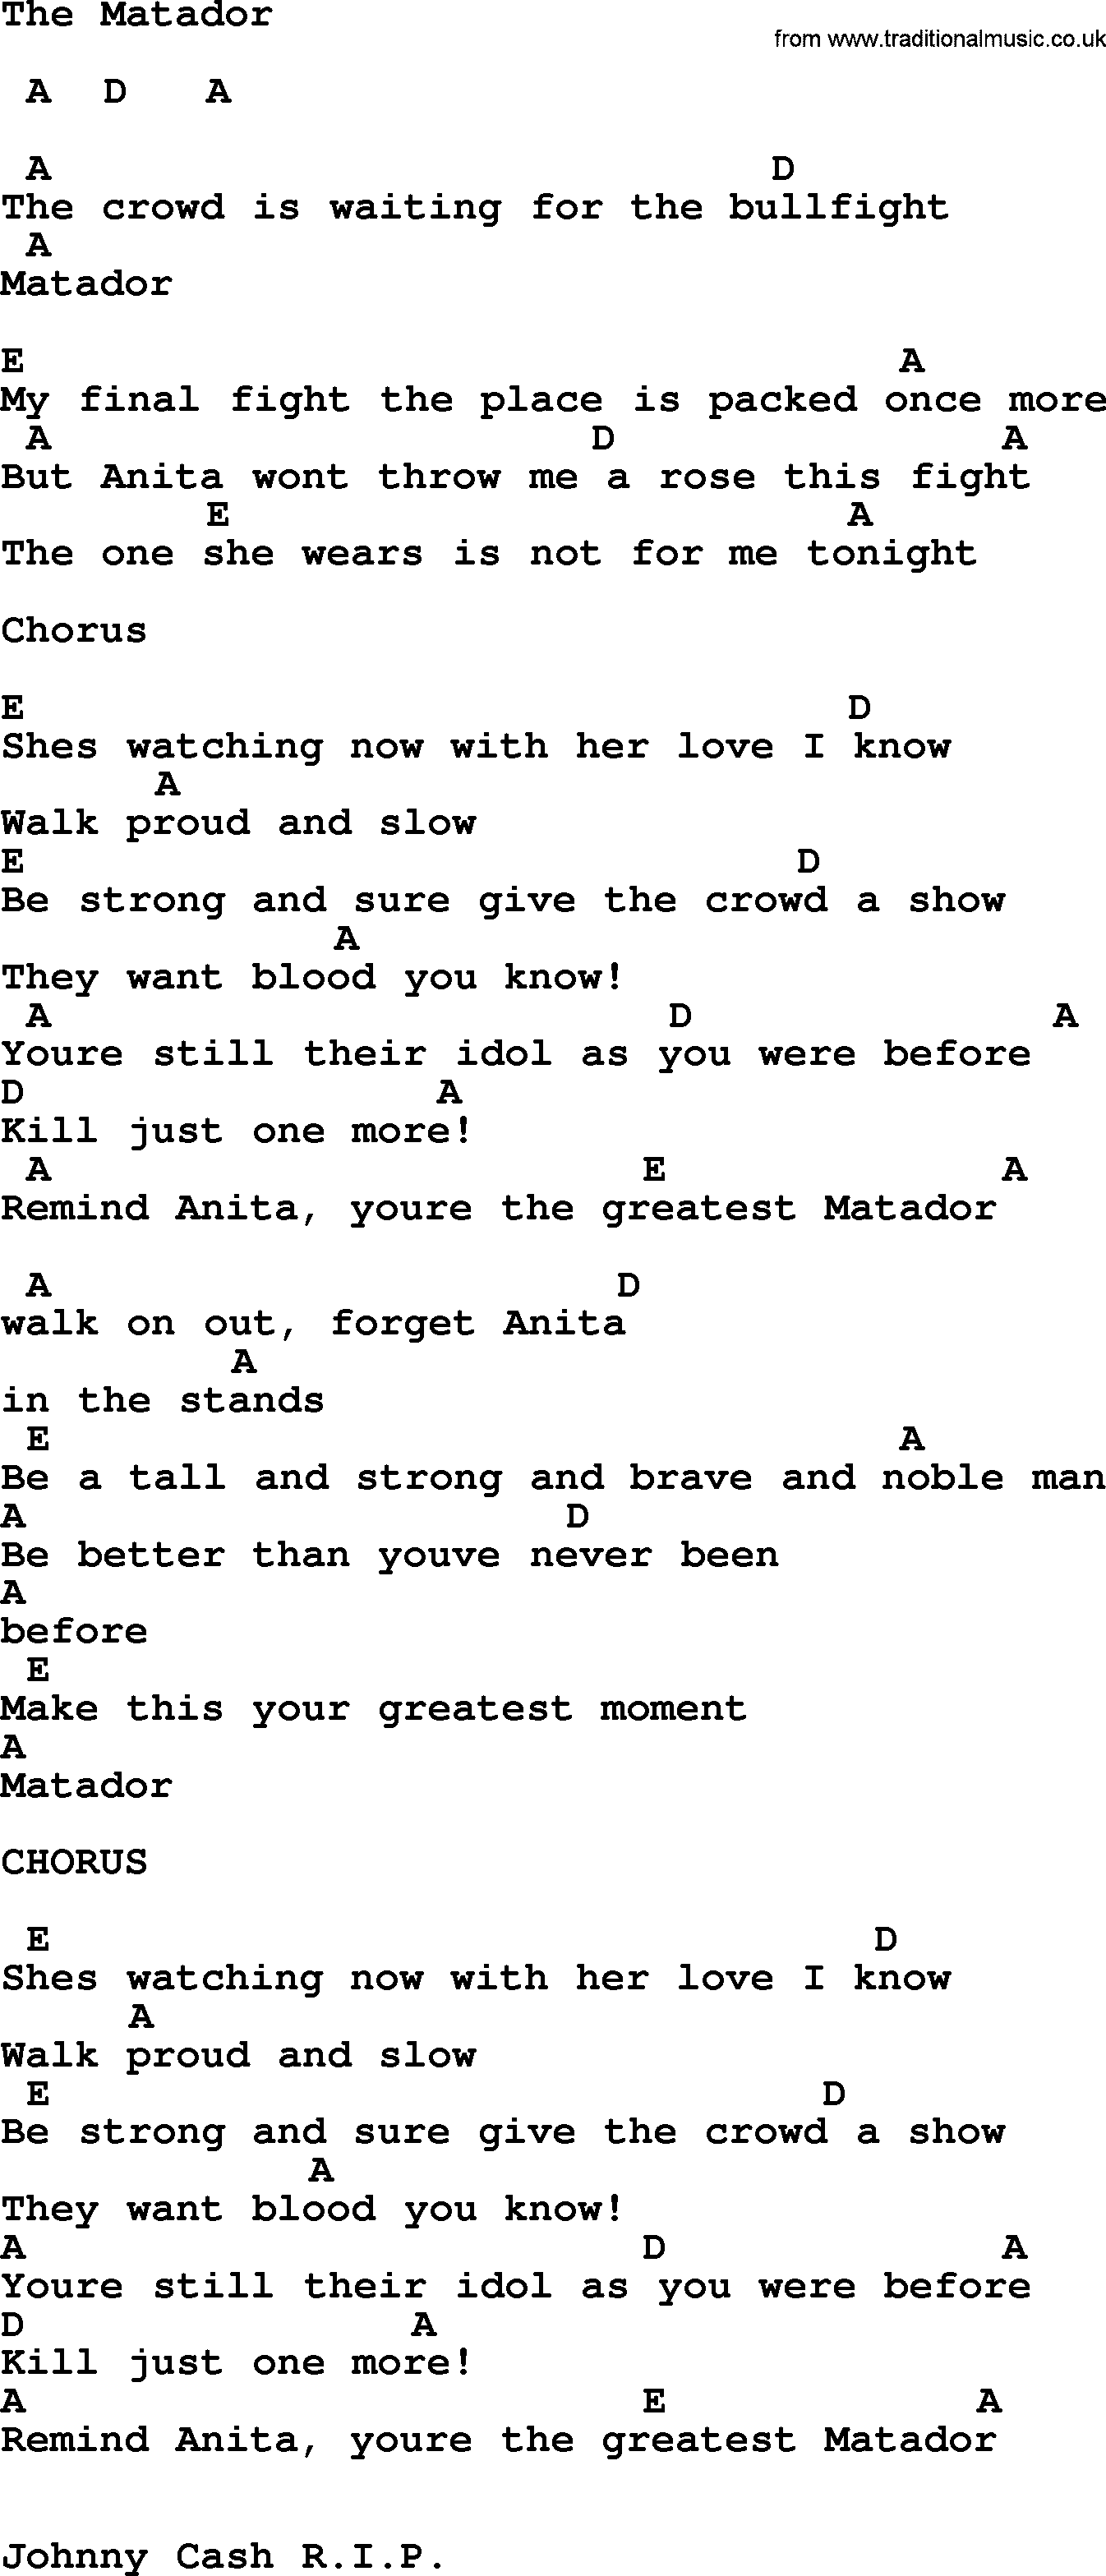 Johnny Cash song The Matador, lyrics and chords